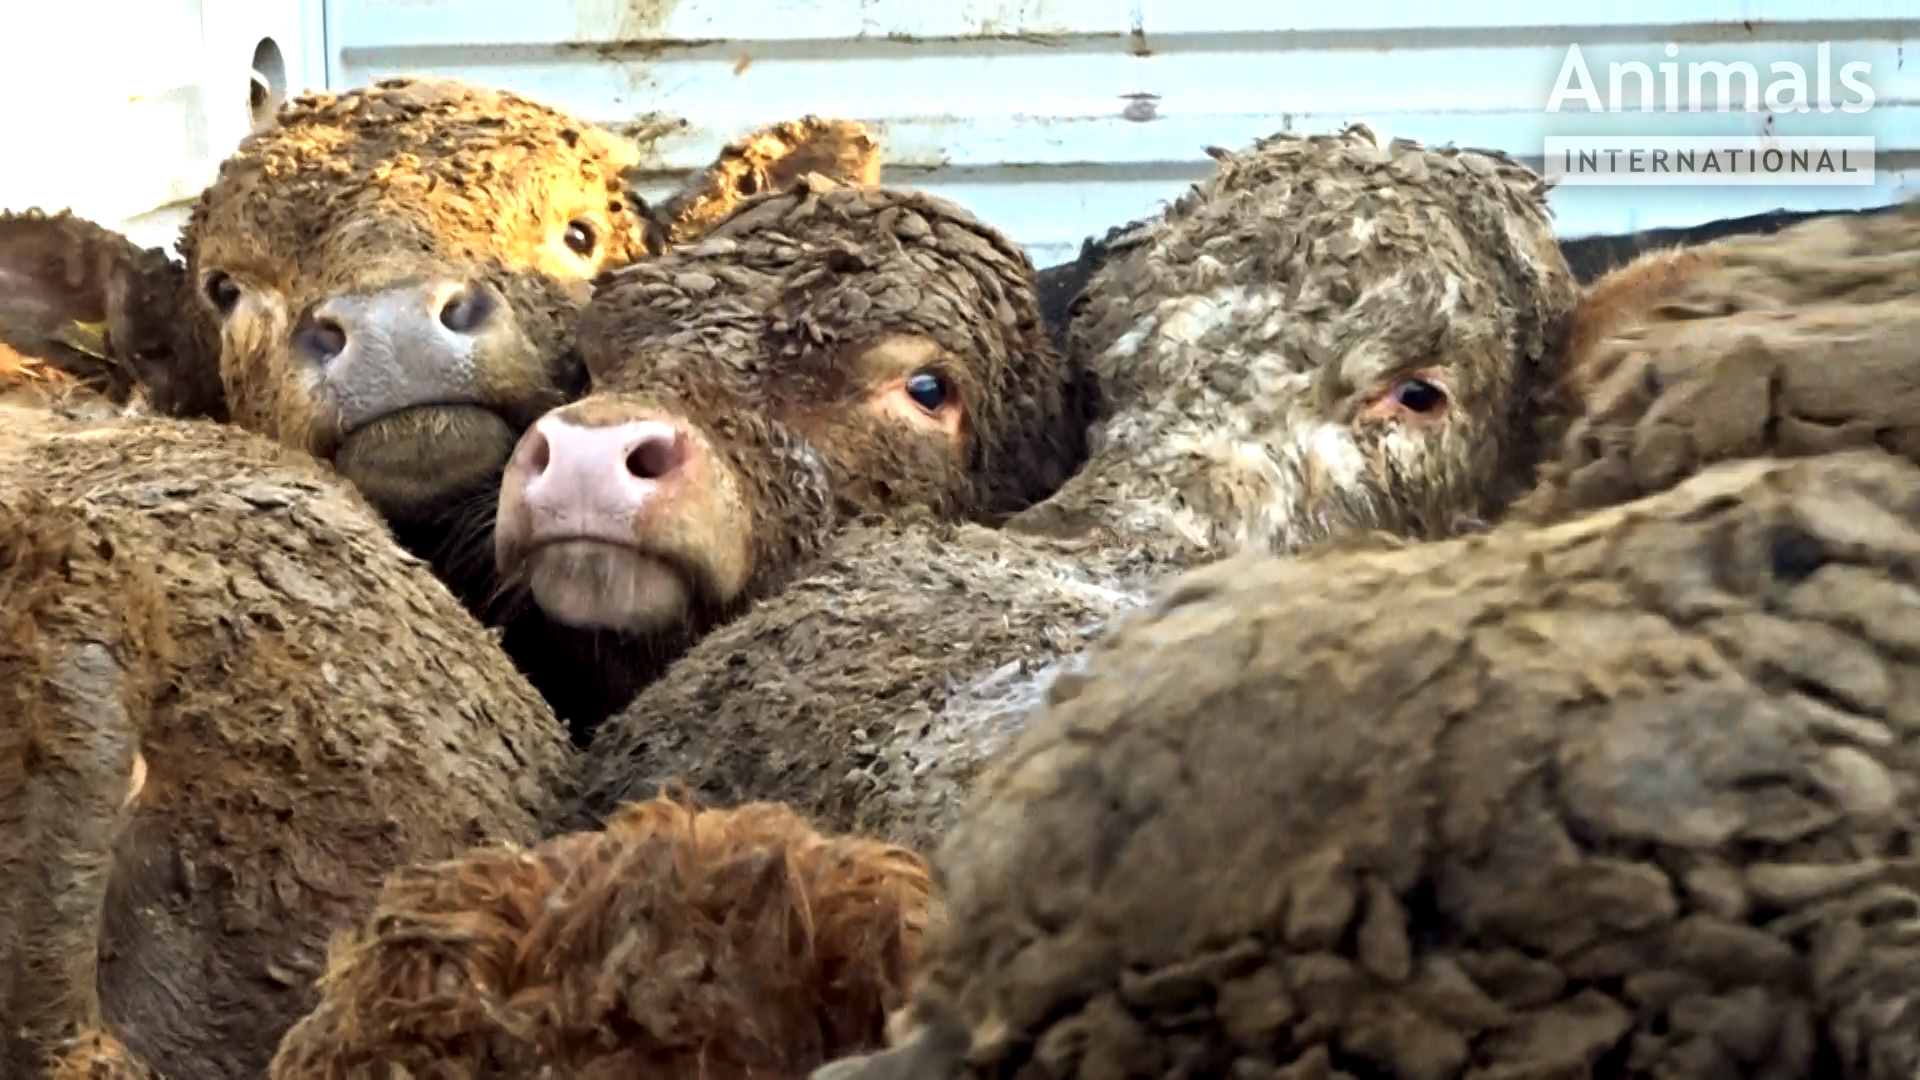 Investigation reveals 'horrific' export of livestock